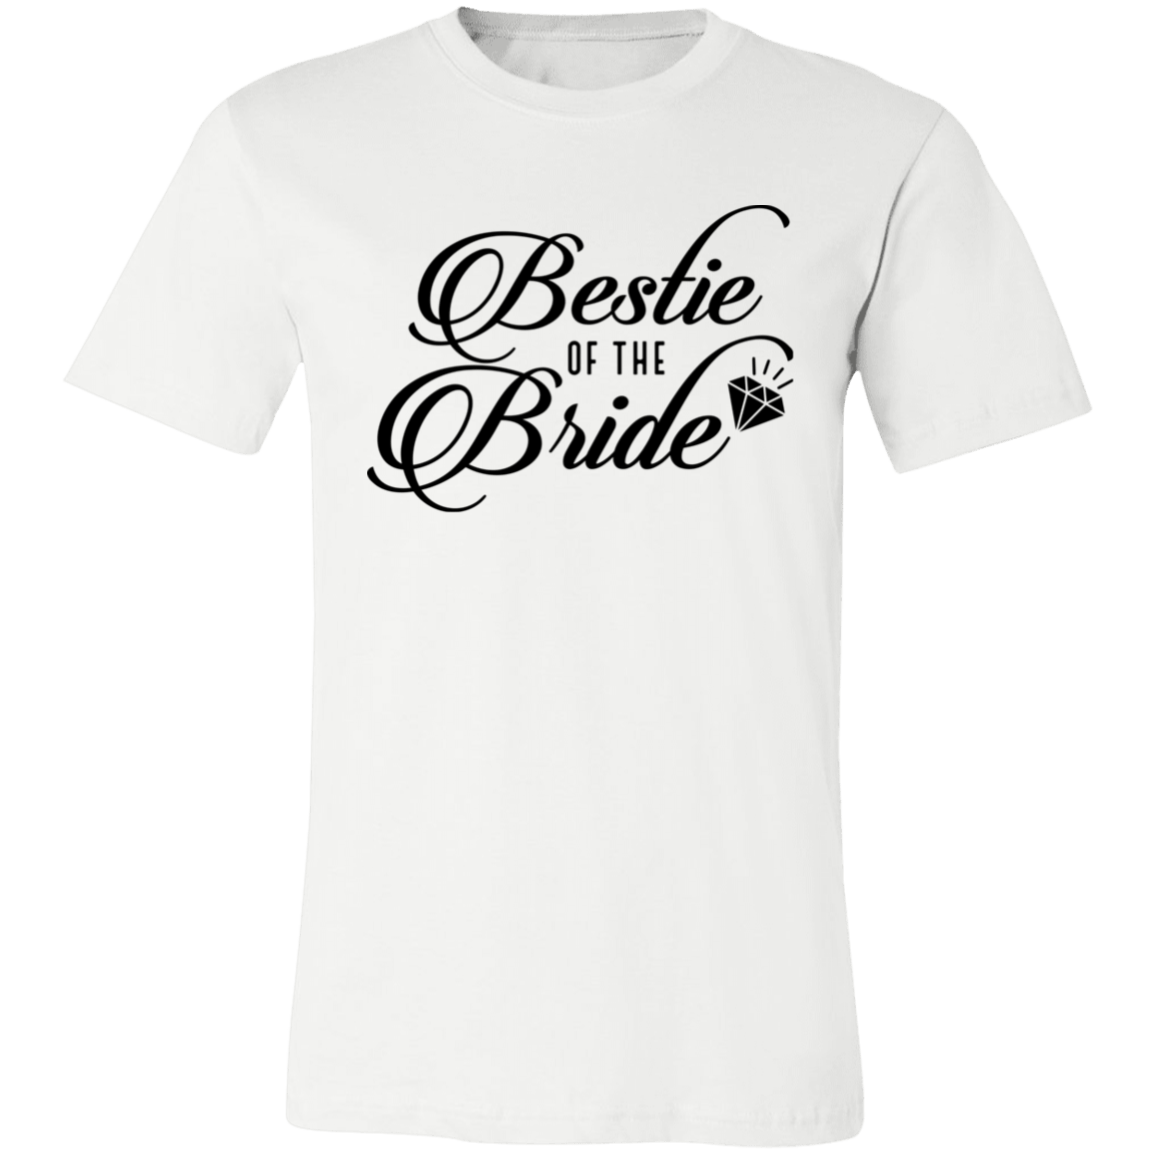 BESTIE OF THE BRIDE Unisex Jersey Short-Sleeve T-Shirt